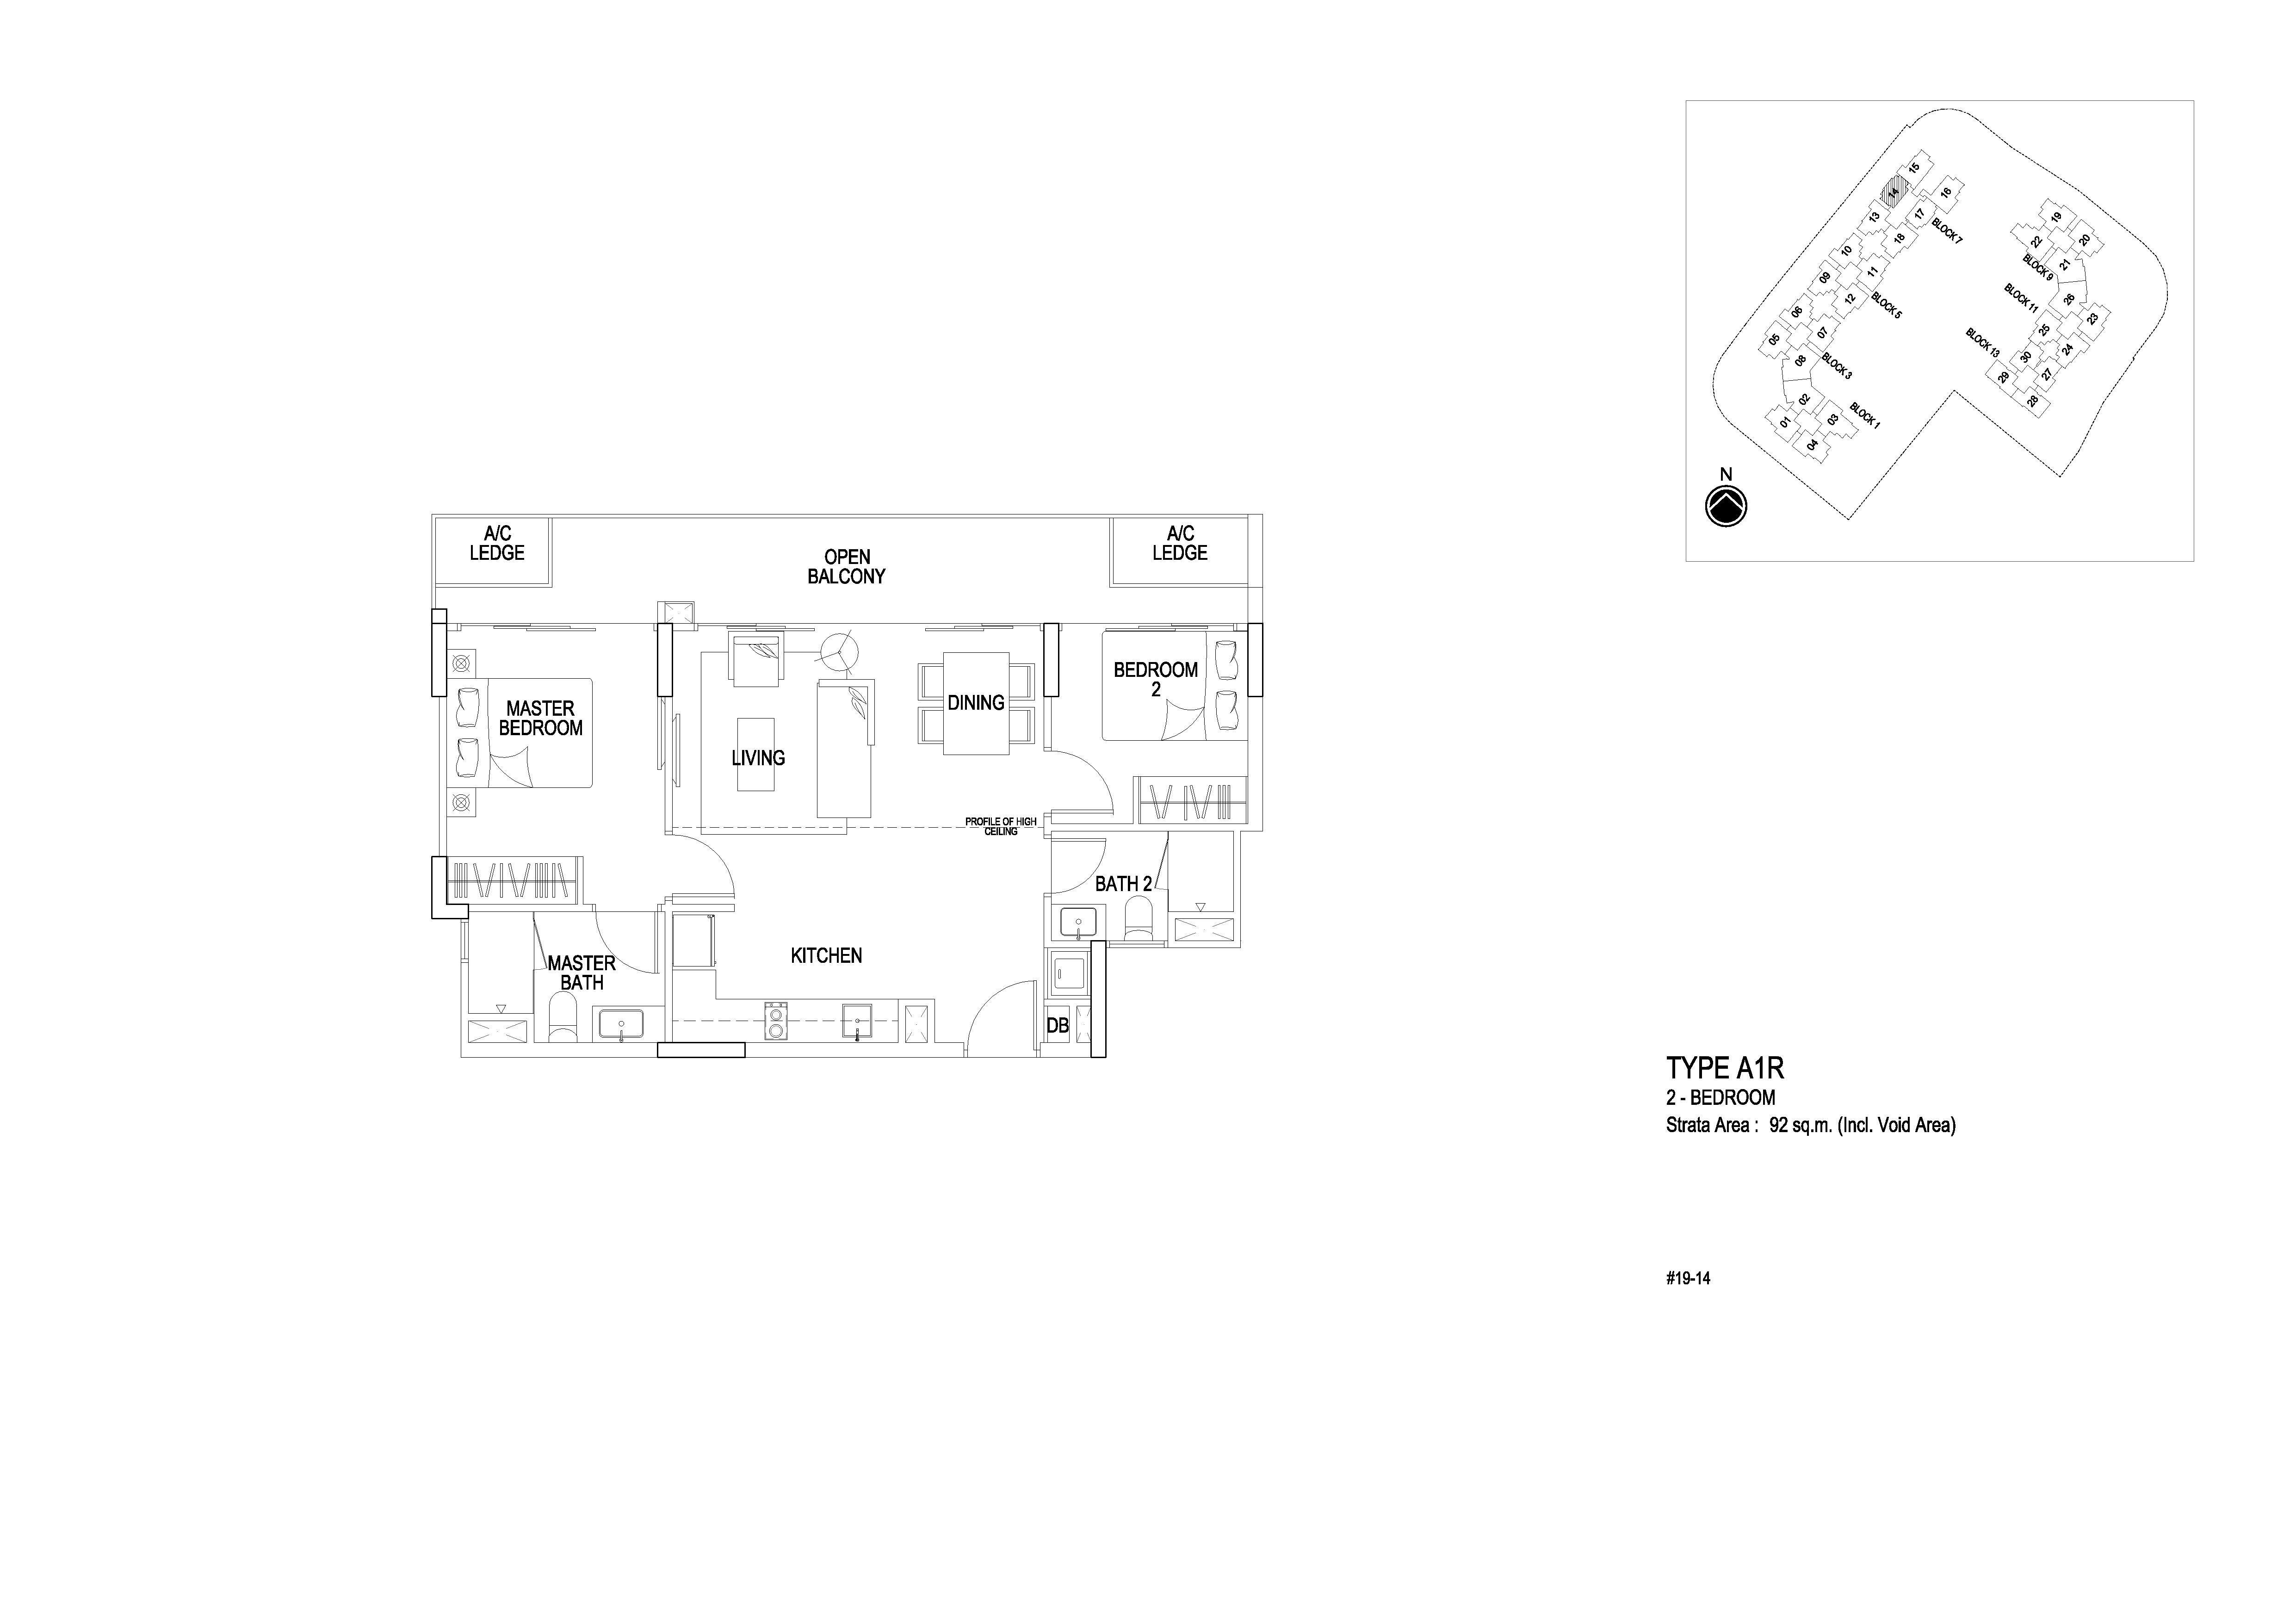 Flo Residence 2 Bedroom Roof Terrace Floor Plans Type A1R